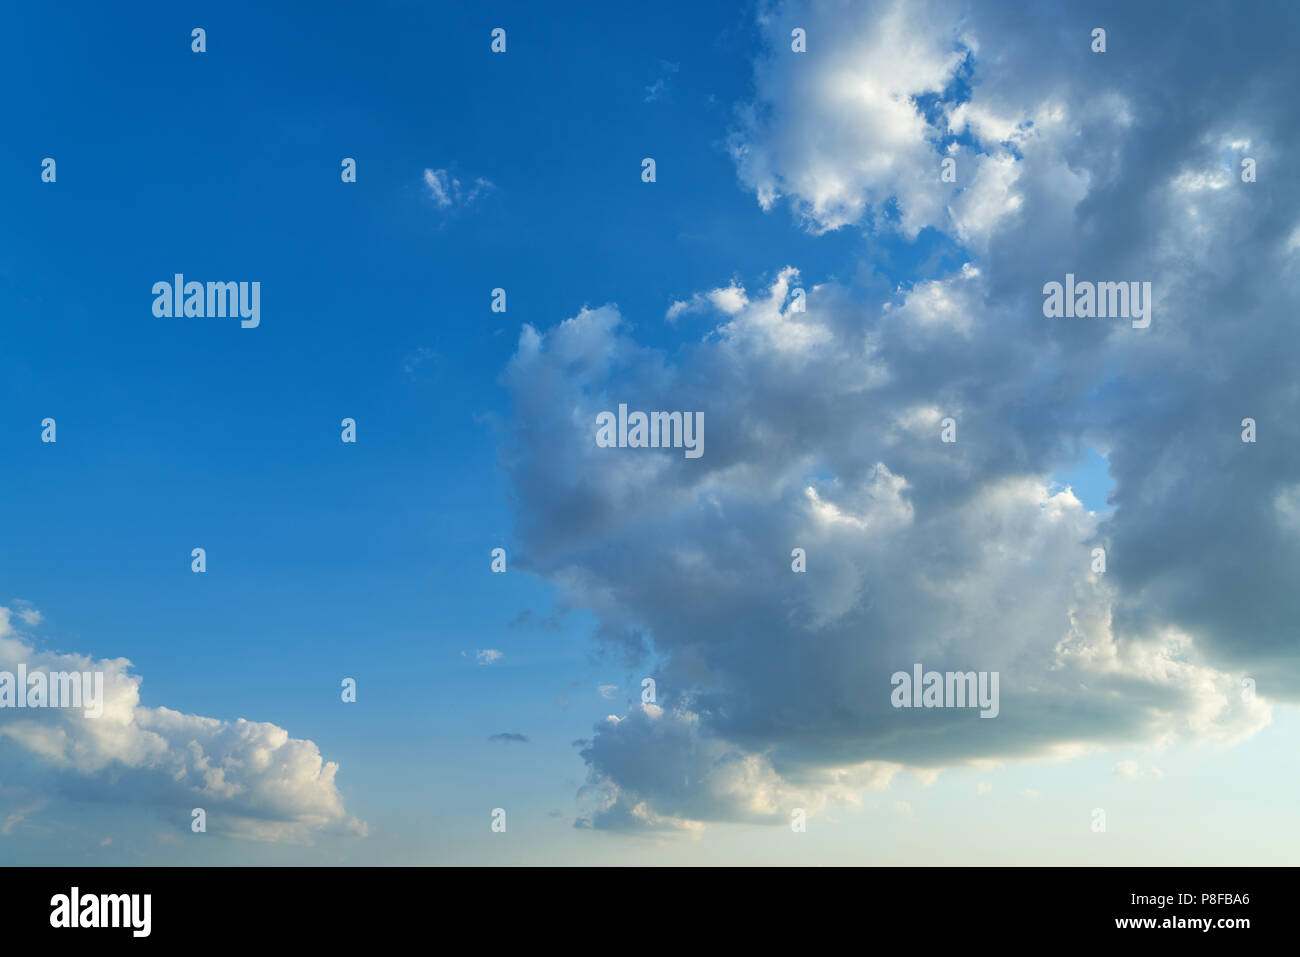 Idylllic cielo azul con nubes blancas grandes Foto de stock